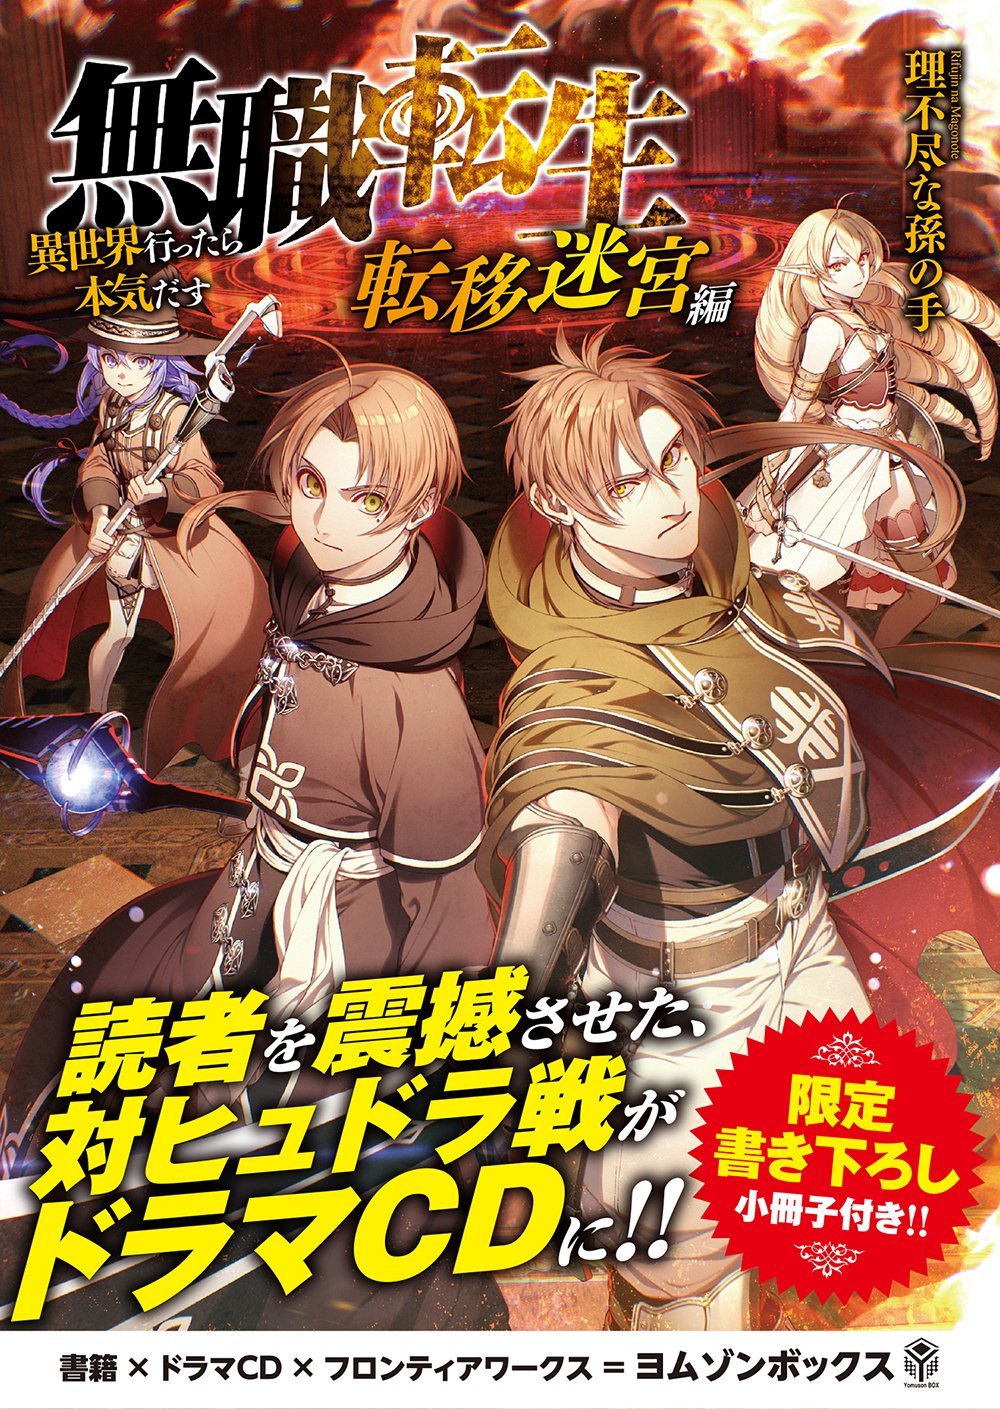 Light Novel Volume 14, Mushoku Tensei Wiki